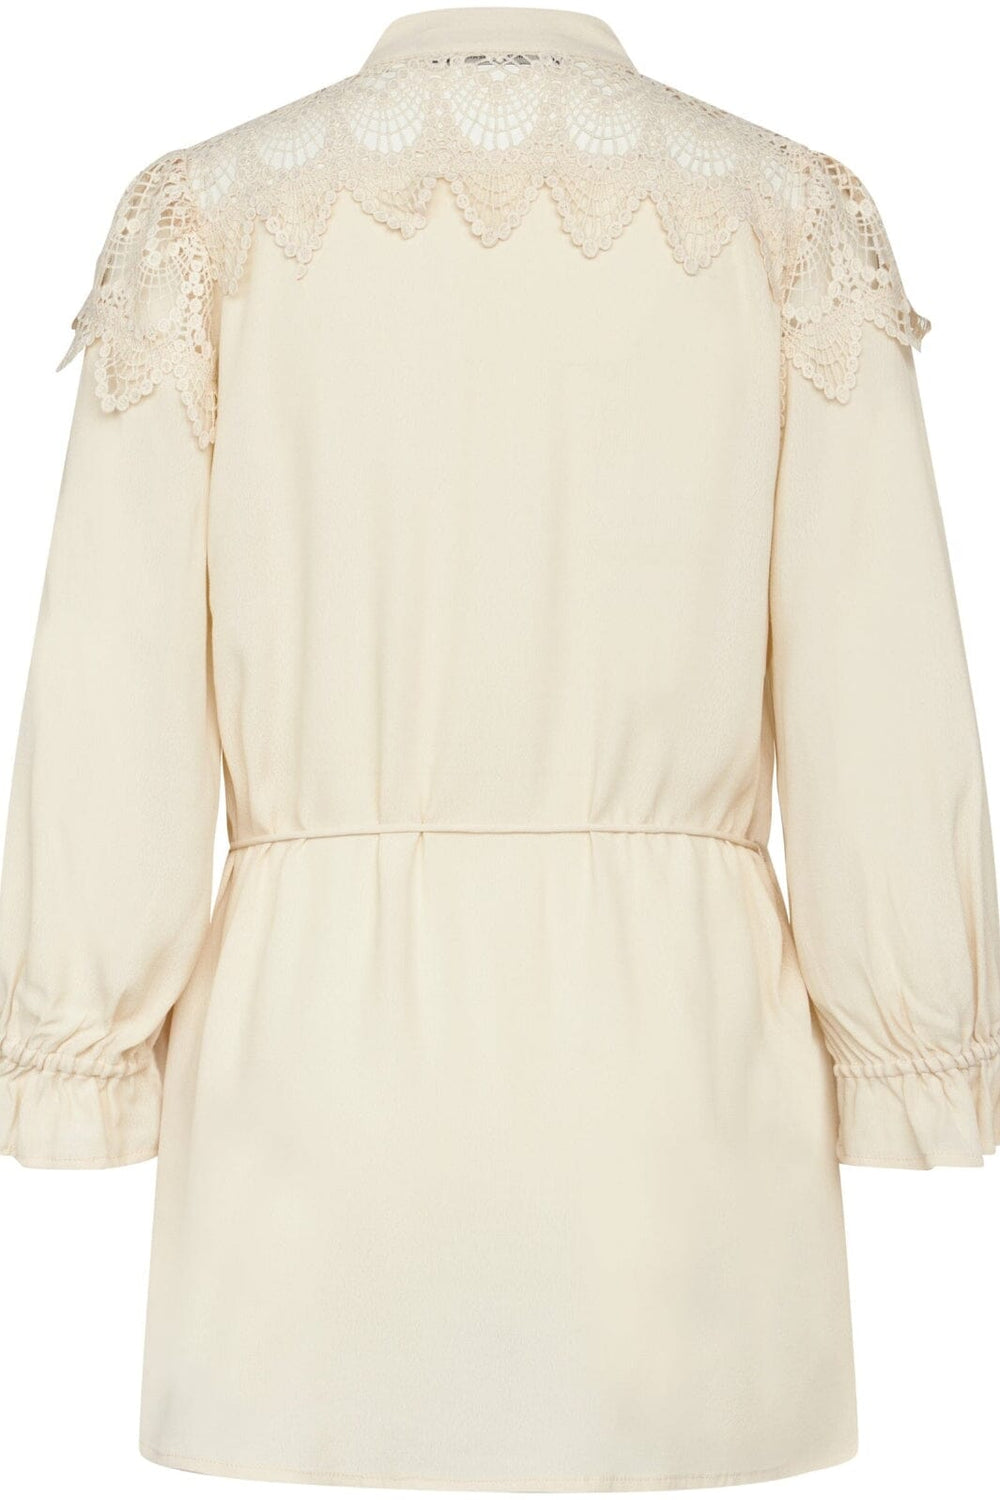 Bruuns Bazaar - Lilli Katanas shirt - White Cap Skjorter 